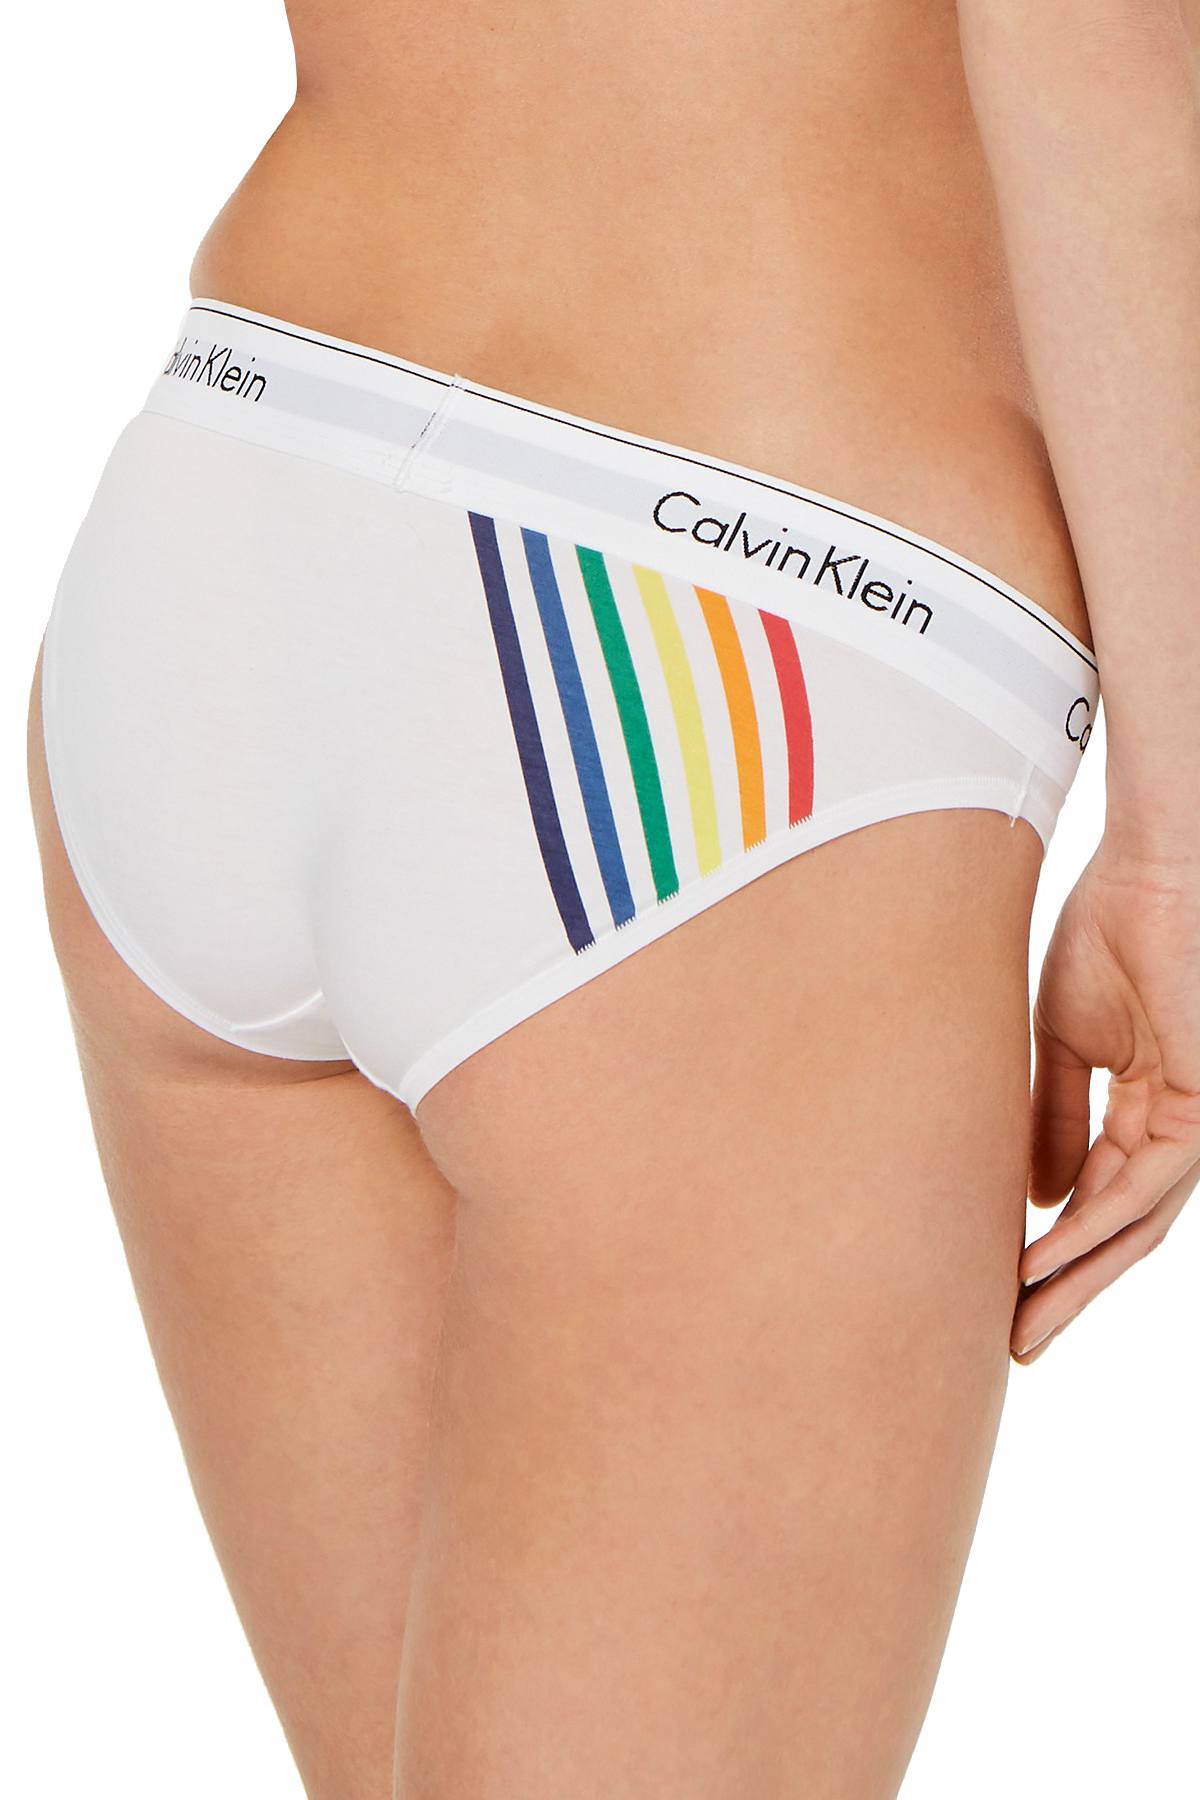 Calvin Klein Modern Cotton Pride thong in white rainbow